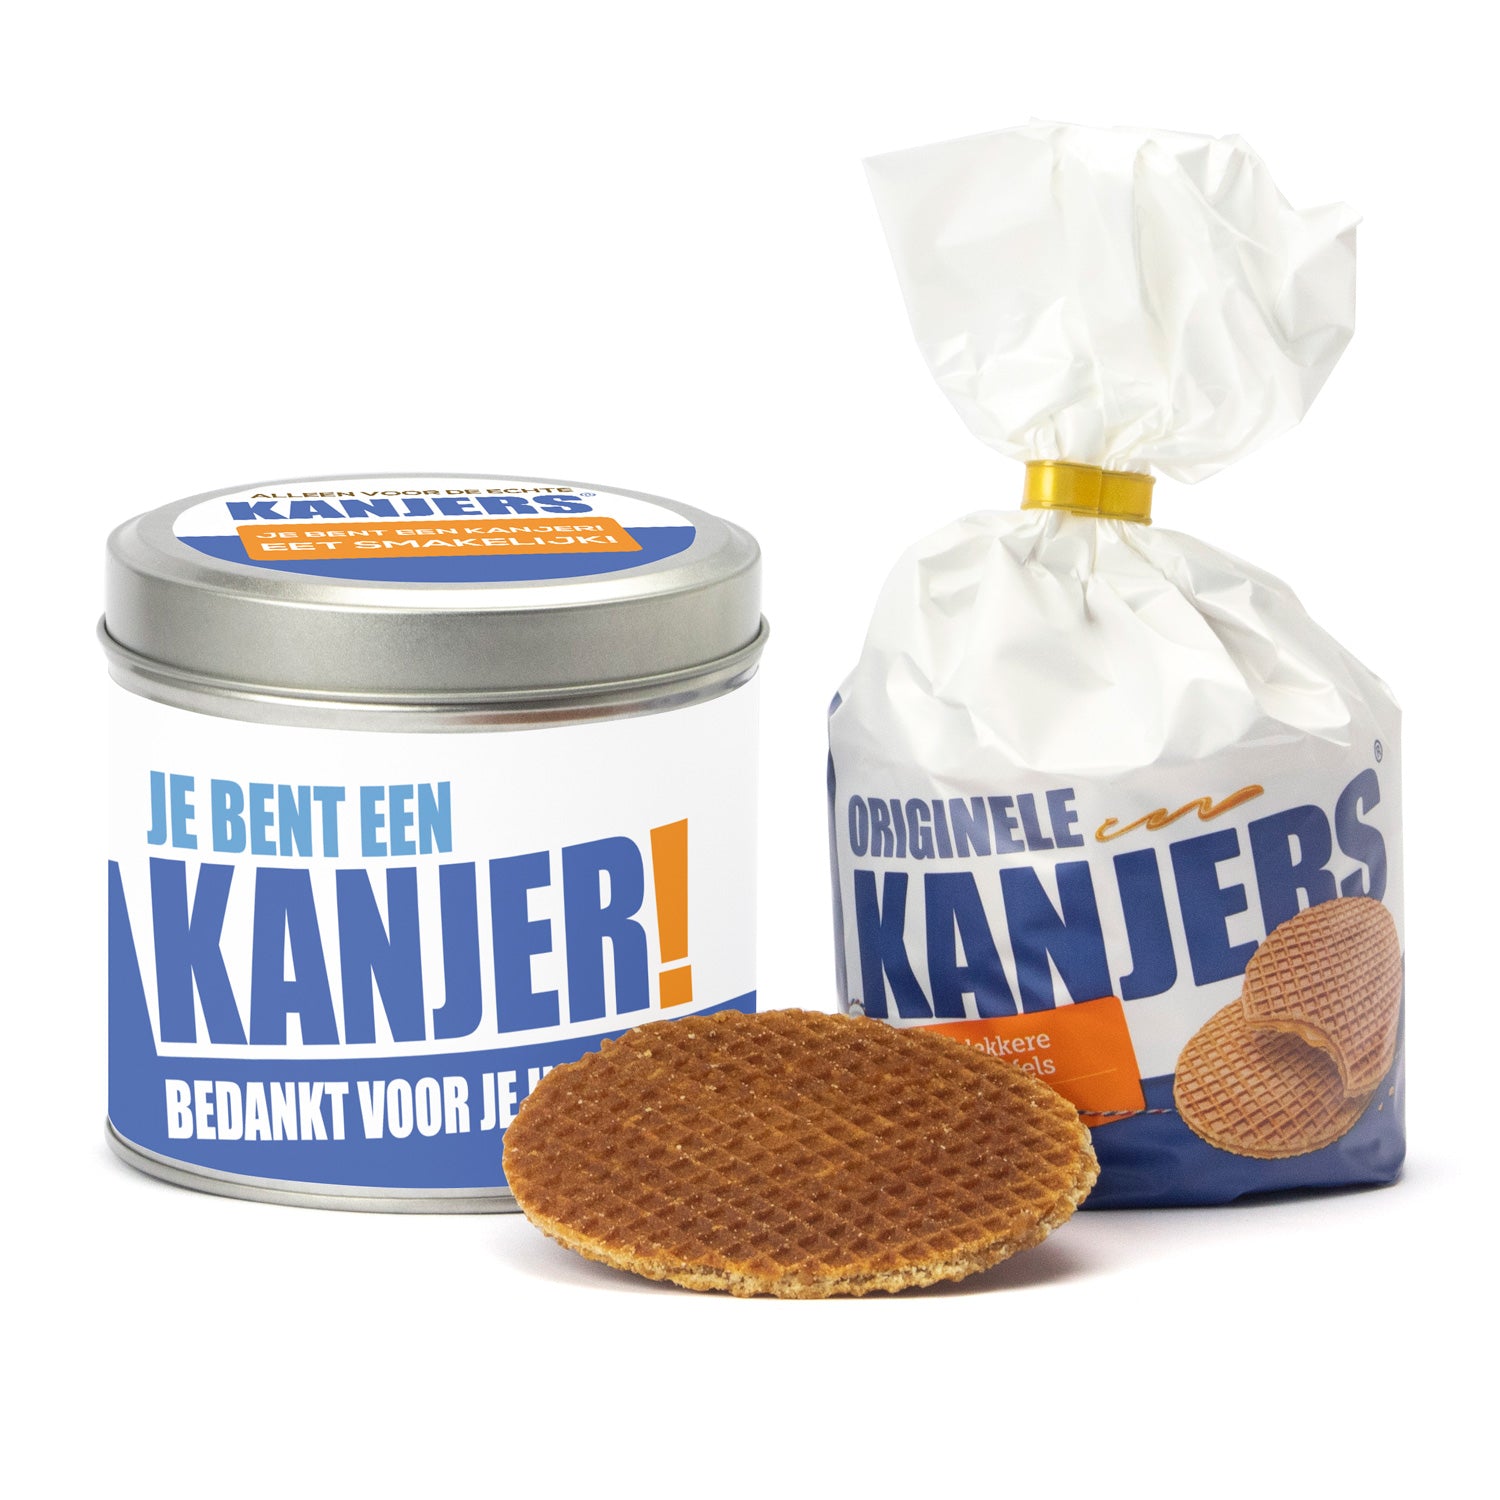 Blik Kanjers Stroopwafels met logo - Zakelijk - Bedankjes.nl